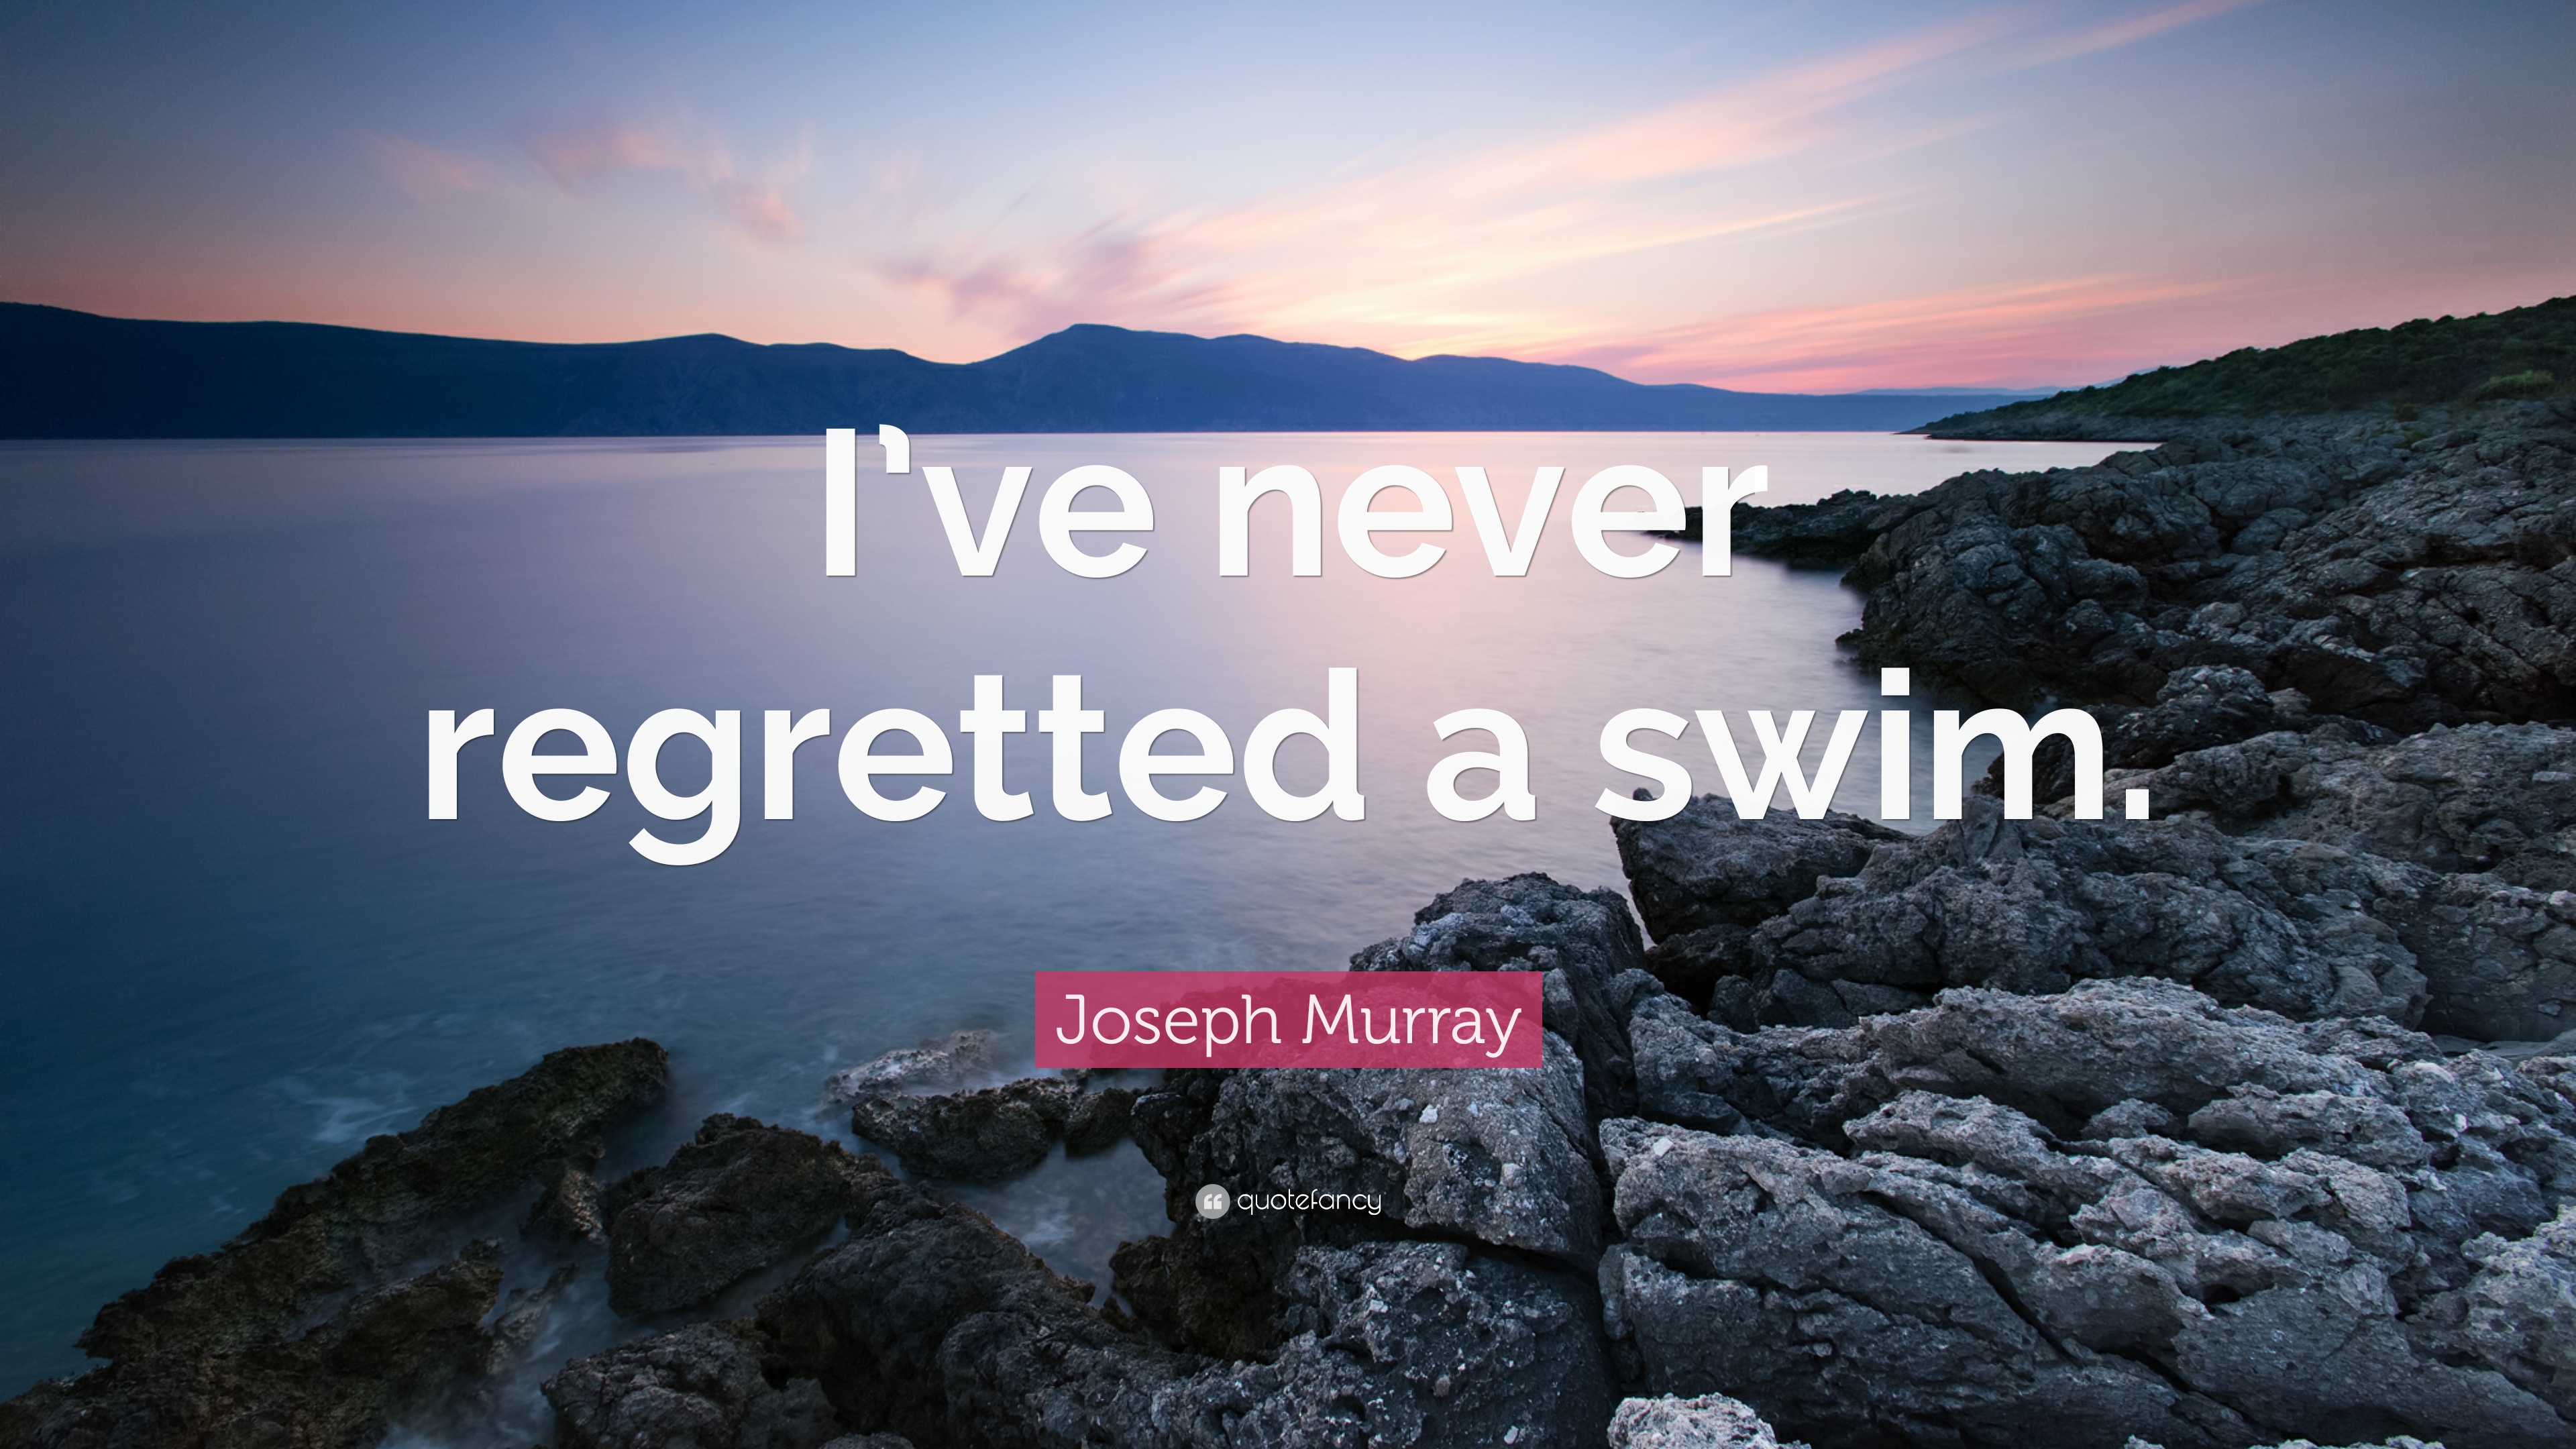 Joseph Murray Quote: “I've never regretted a swim.” 7 wallpaper